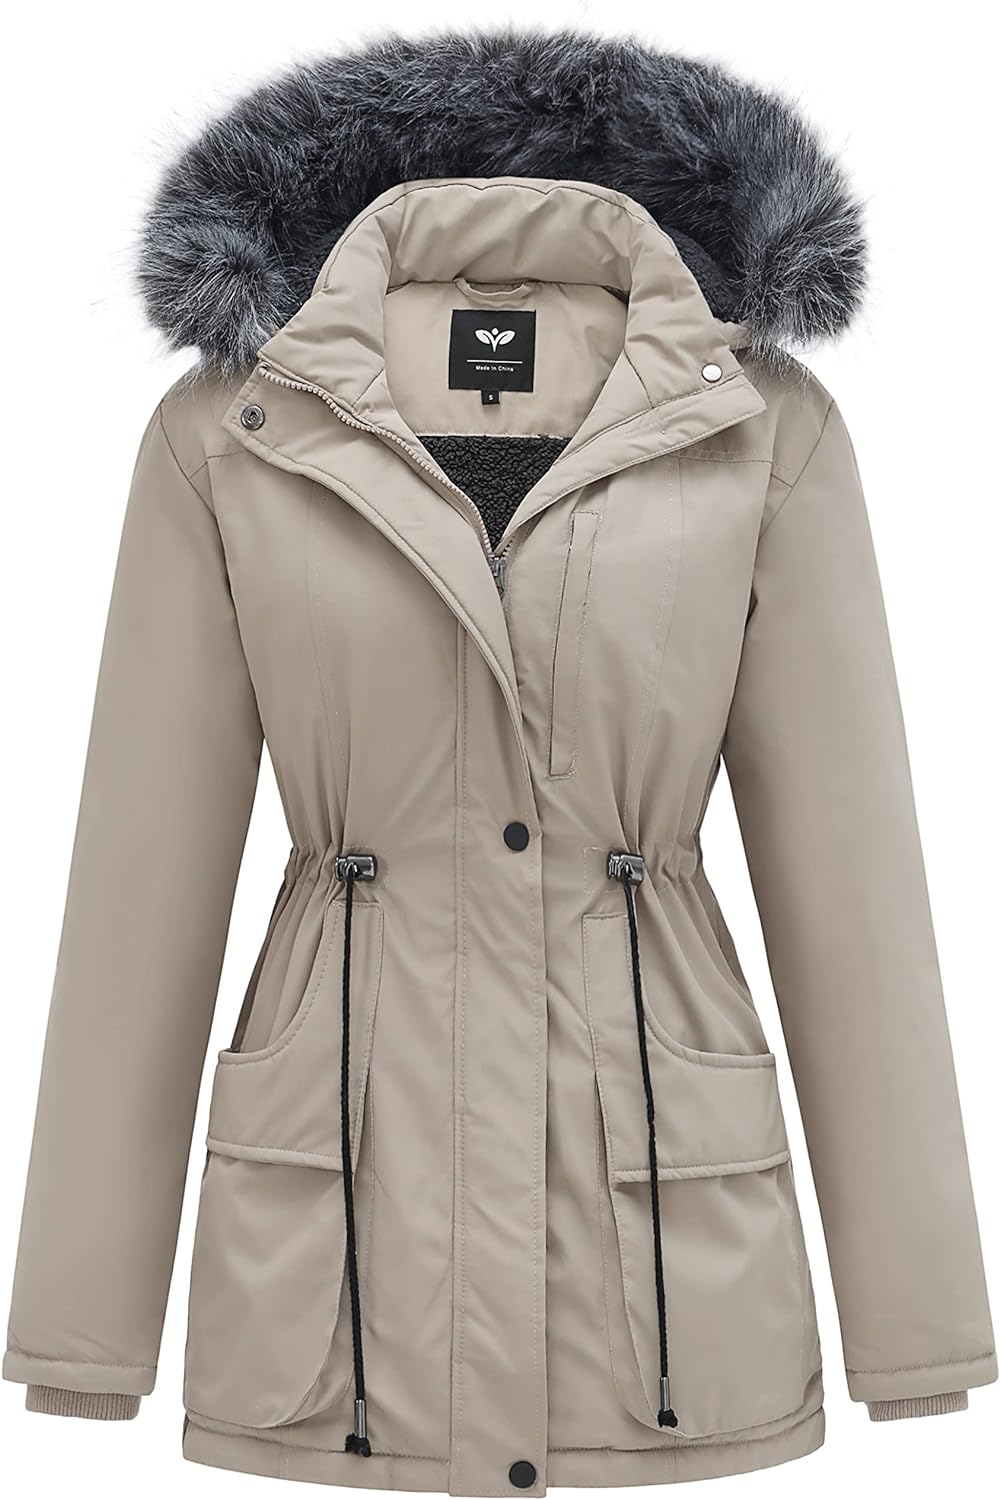  GGleaf Women's Warm Puffer Jacket Parka Winter Coats